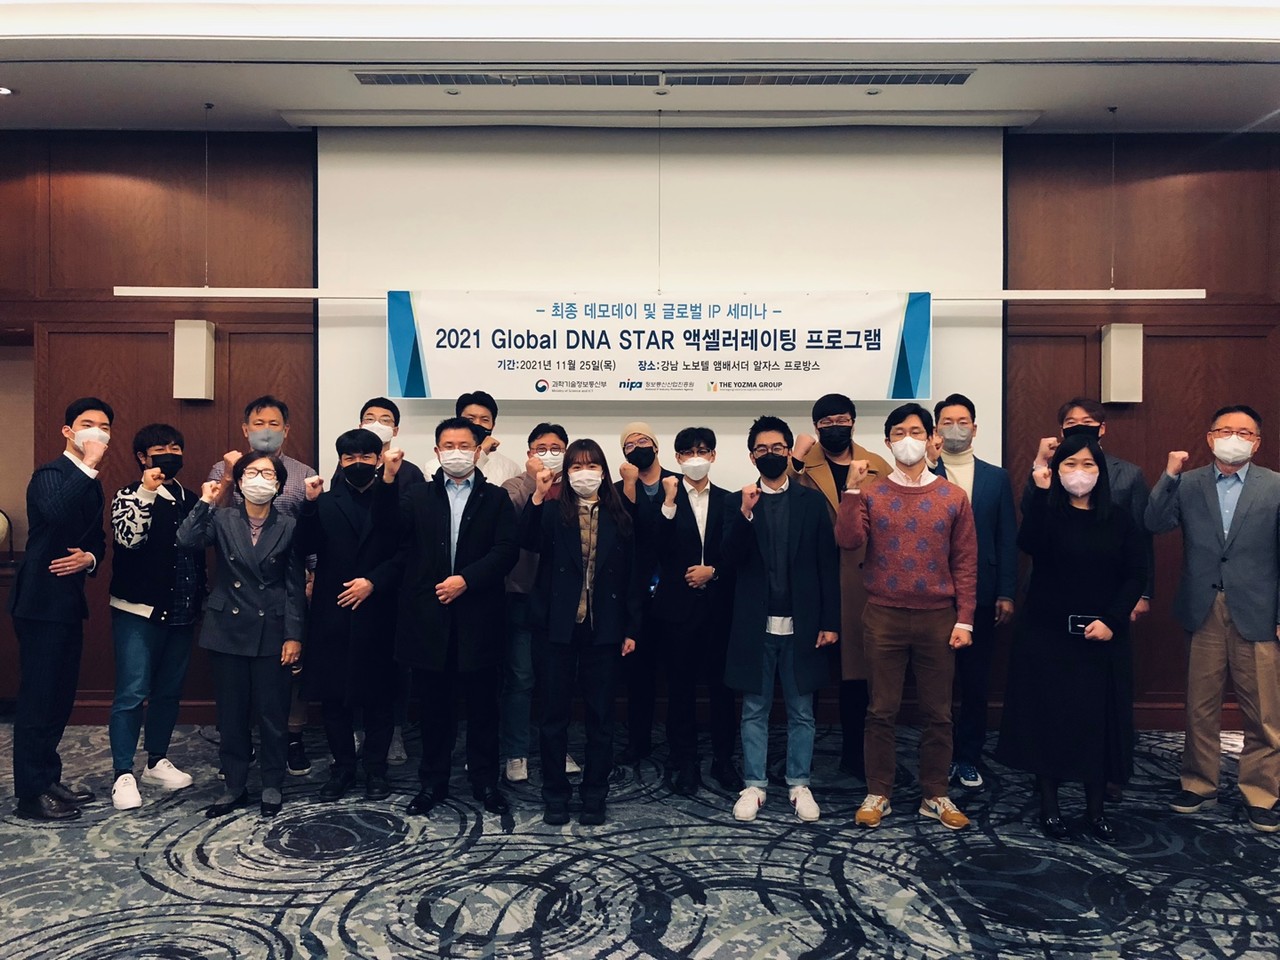 2021 Global D.N.A STAR 육성 프로그램 최종 데모데이에서 참여기업이 단체 기념 촬영을 하고 있다.